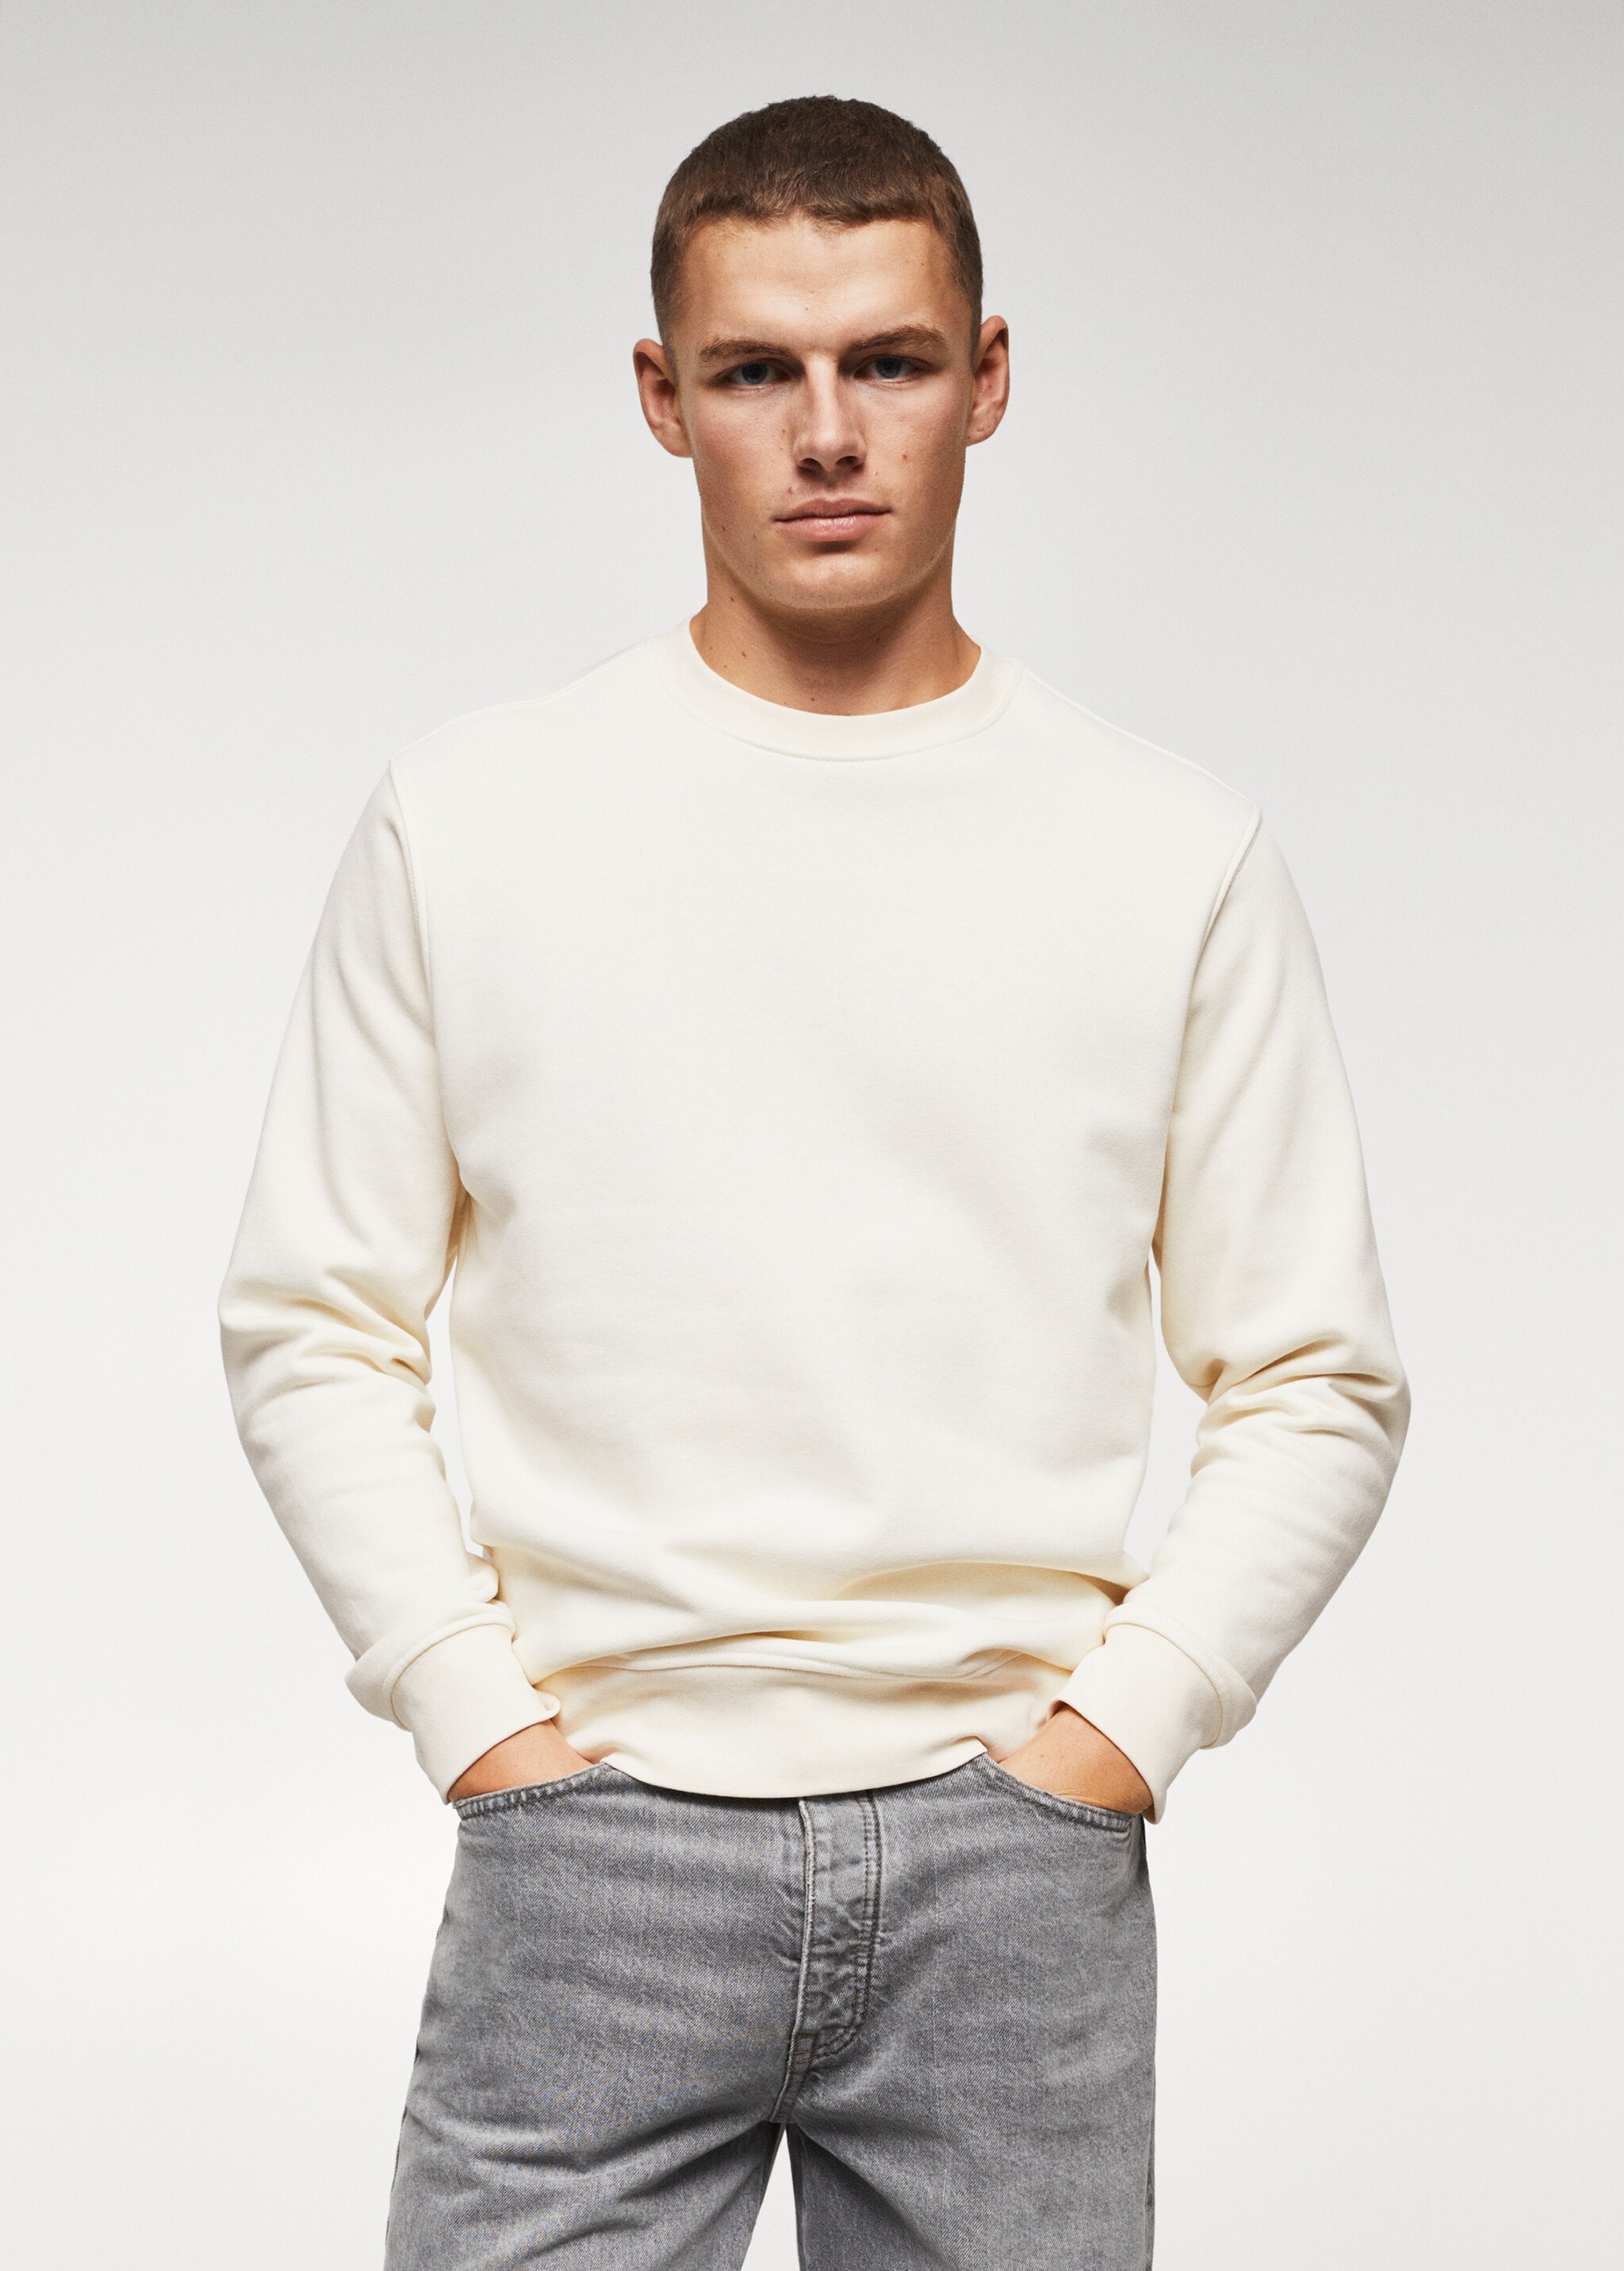 Plush cotton sweatshirt - Medium plane